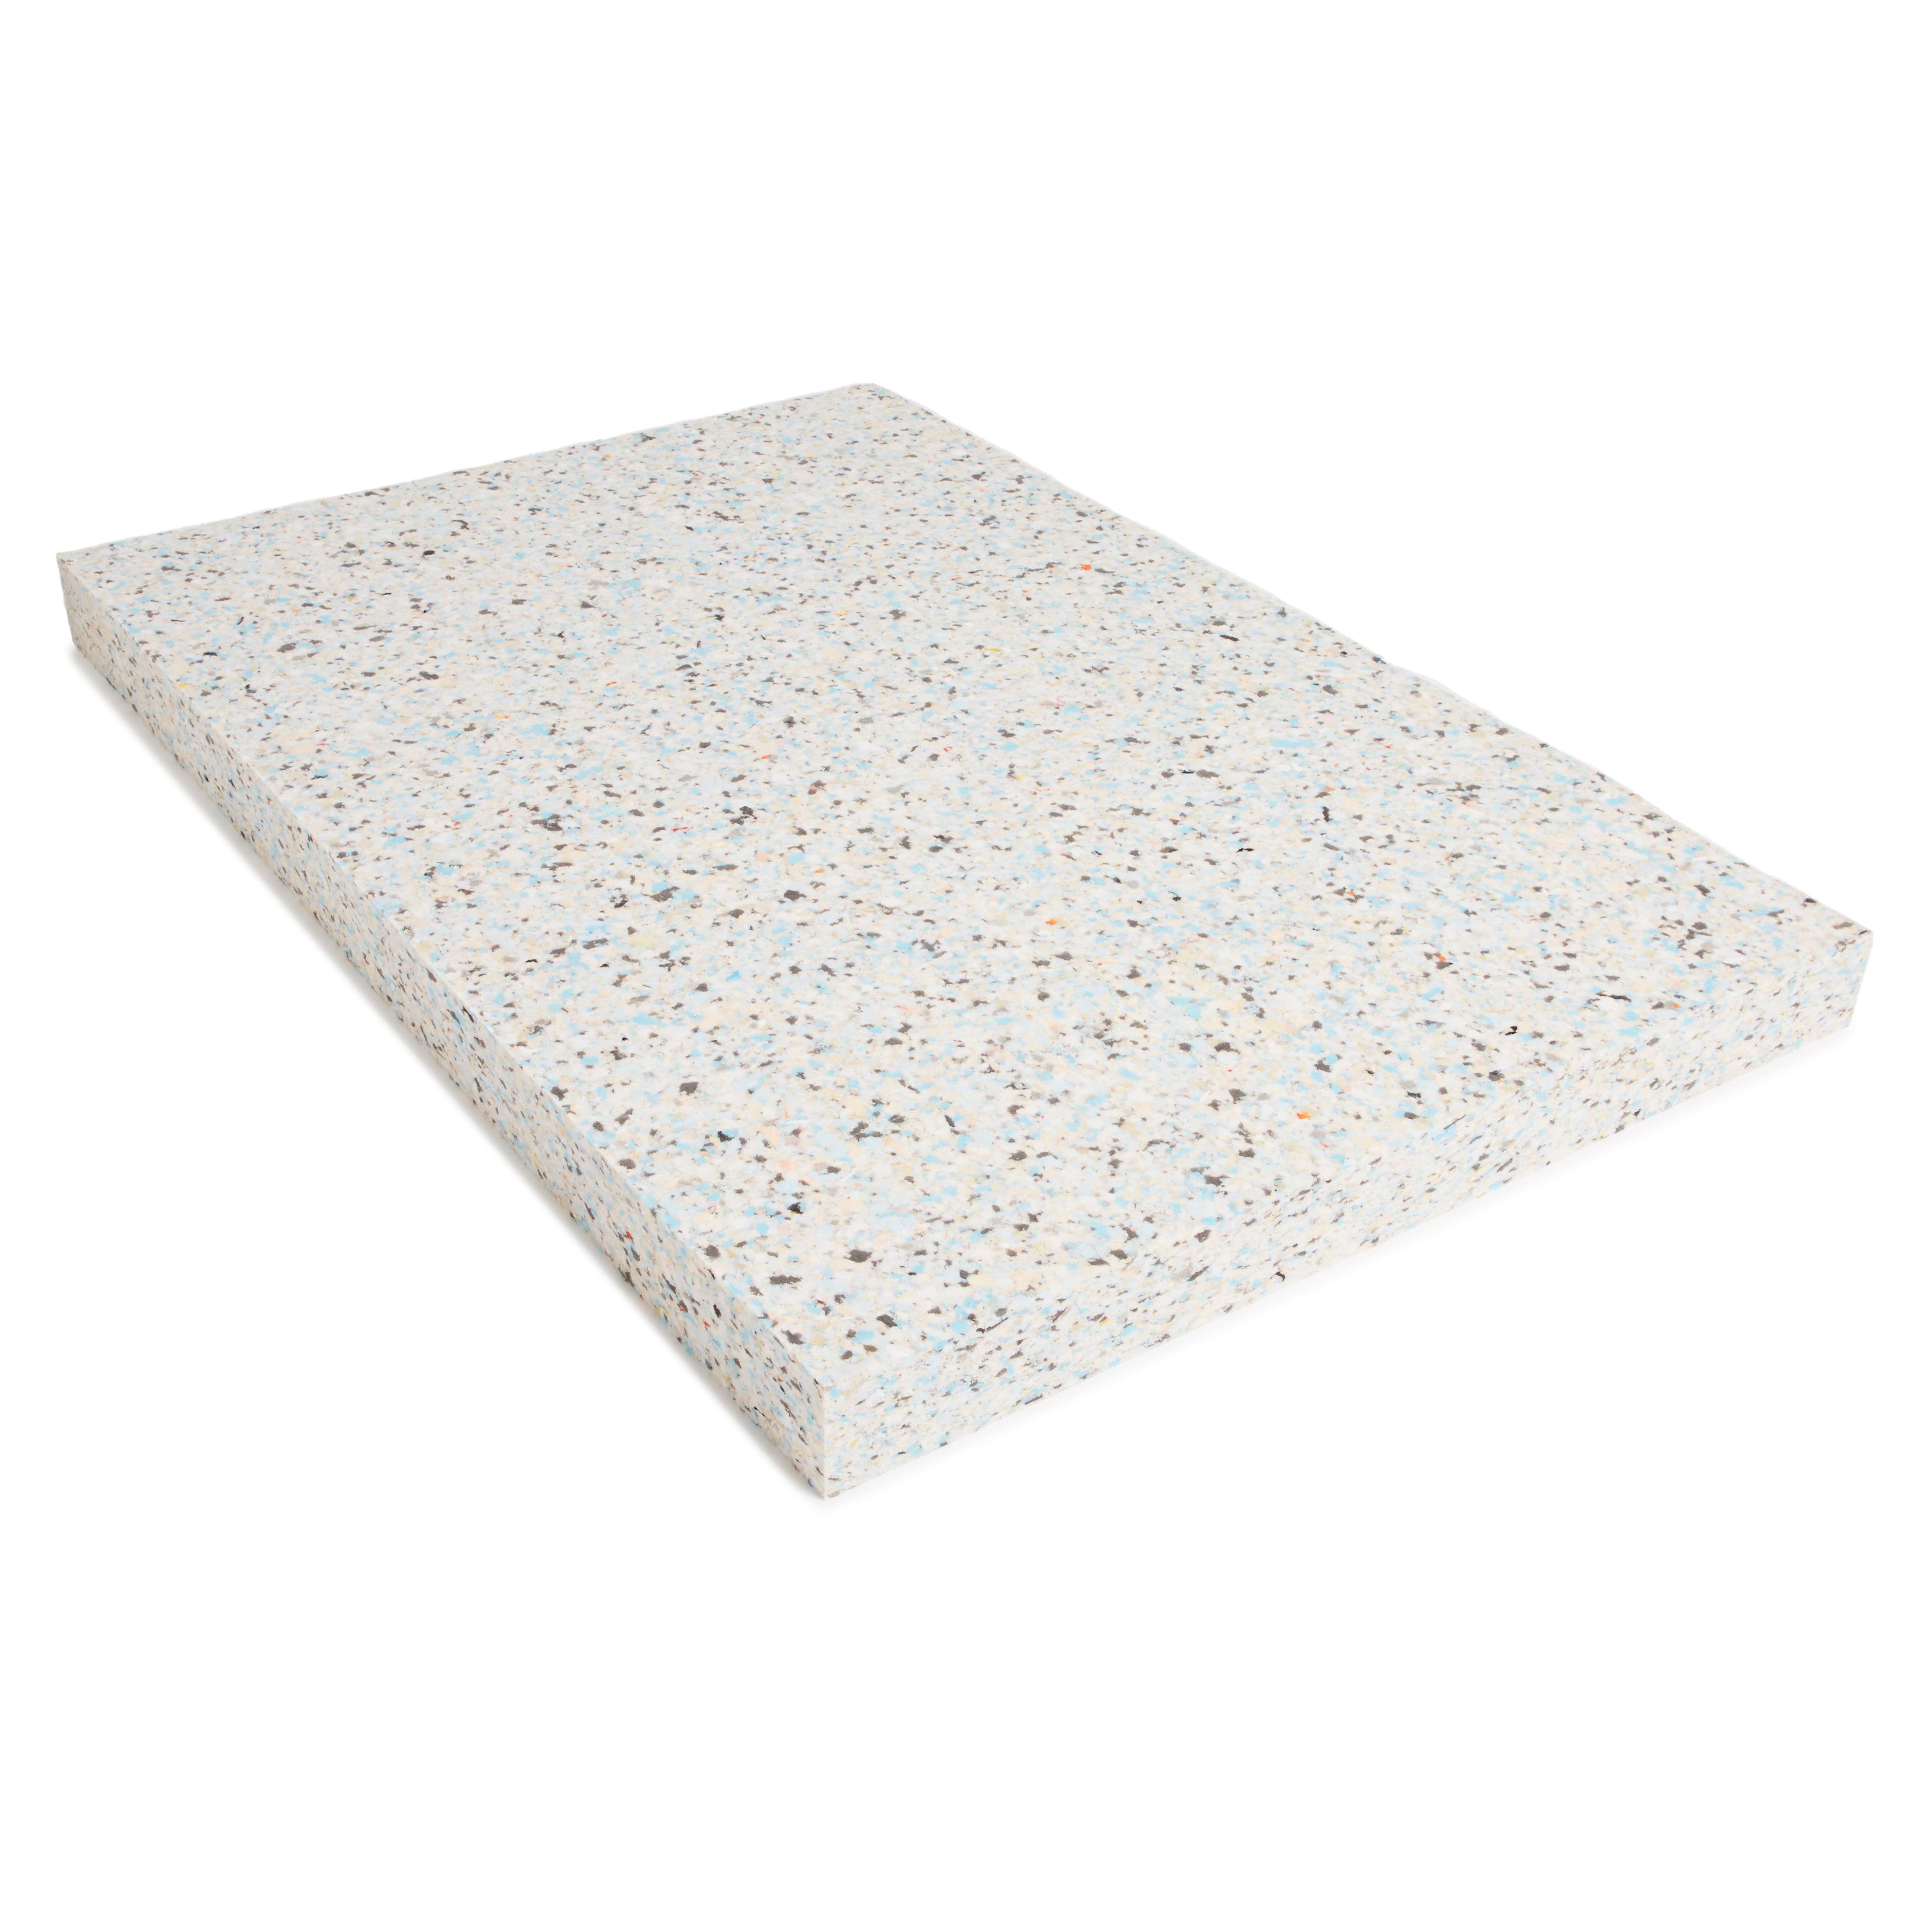 Reconstituted Pallet Foam Block Depth 7.5cm